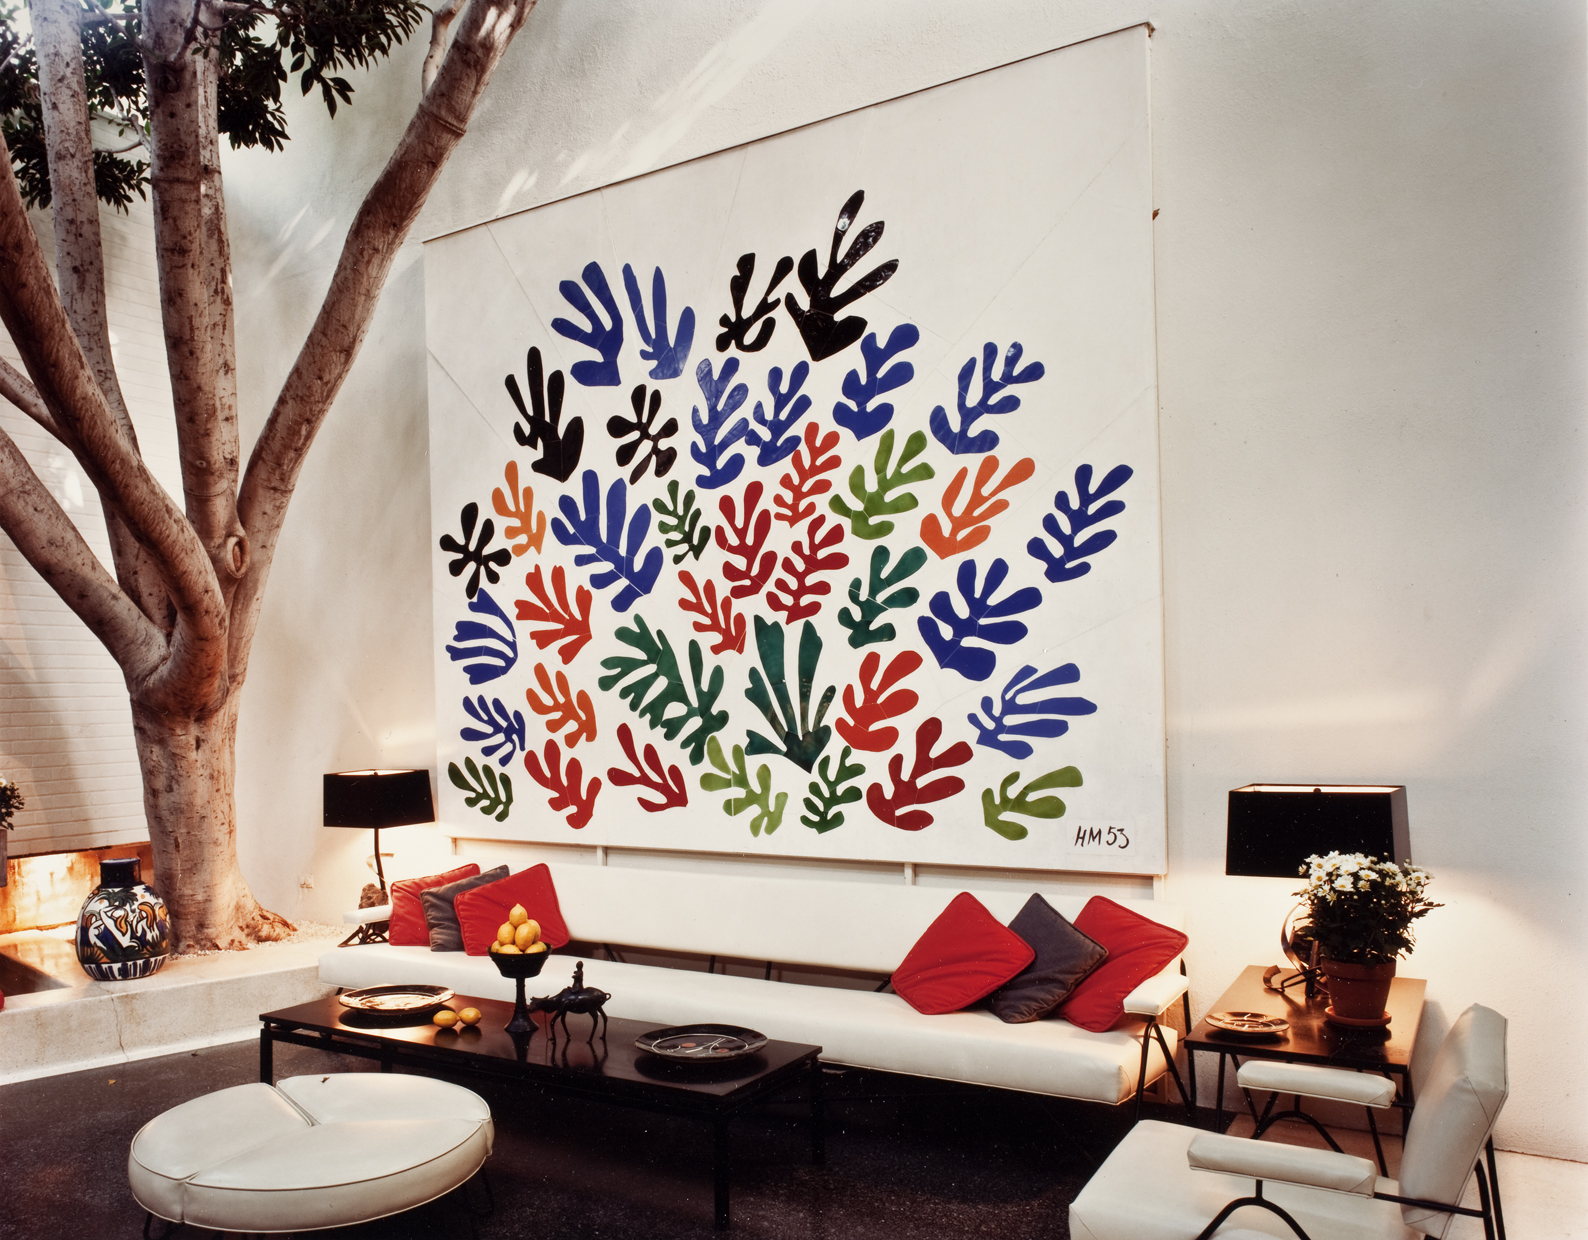 Herformuleren Vervloekt Anemoon vis Major Matisse Ceramic Added to LACMA's Collection | Unframed